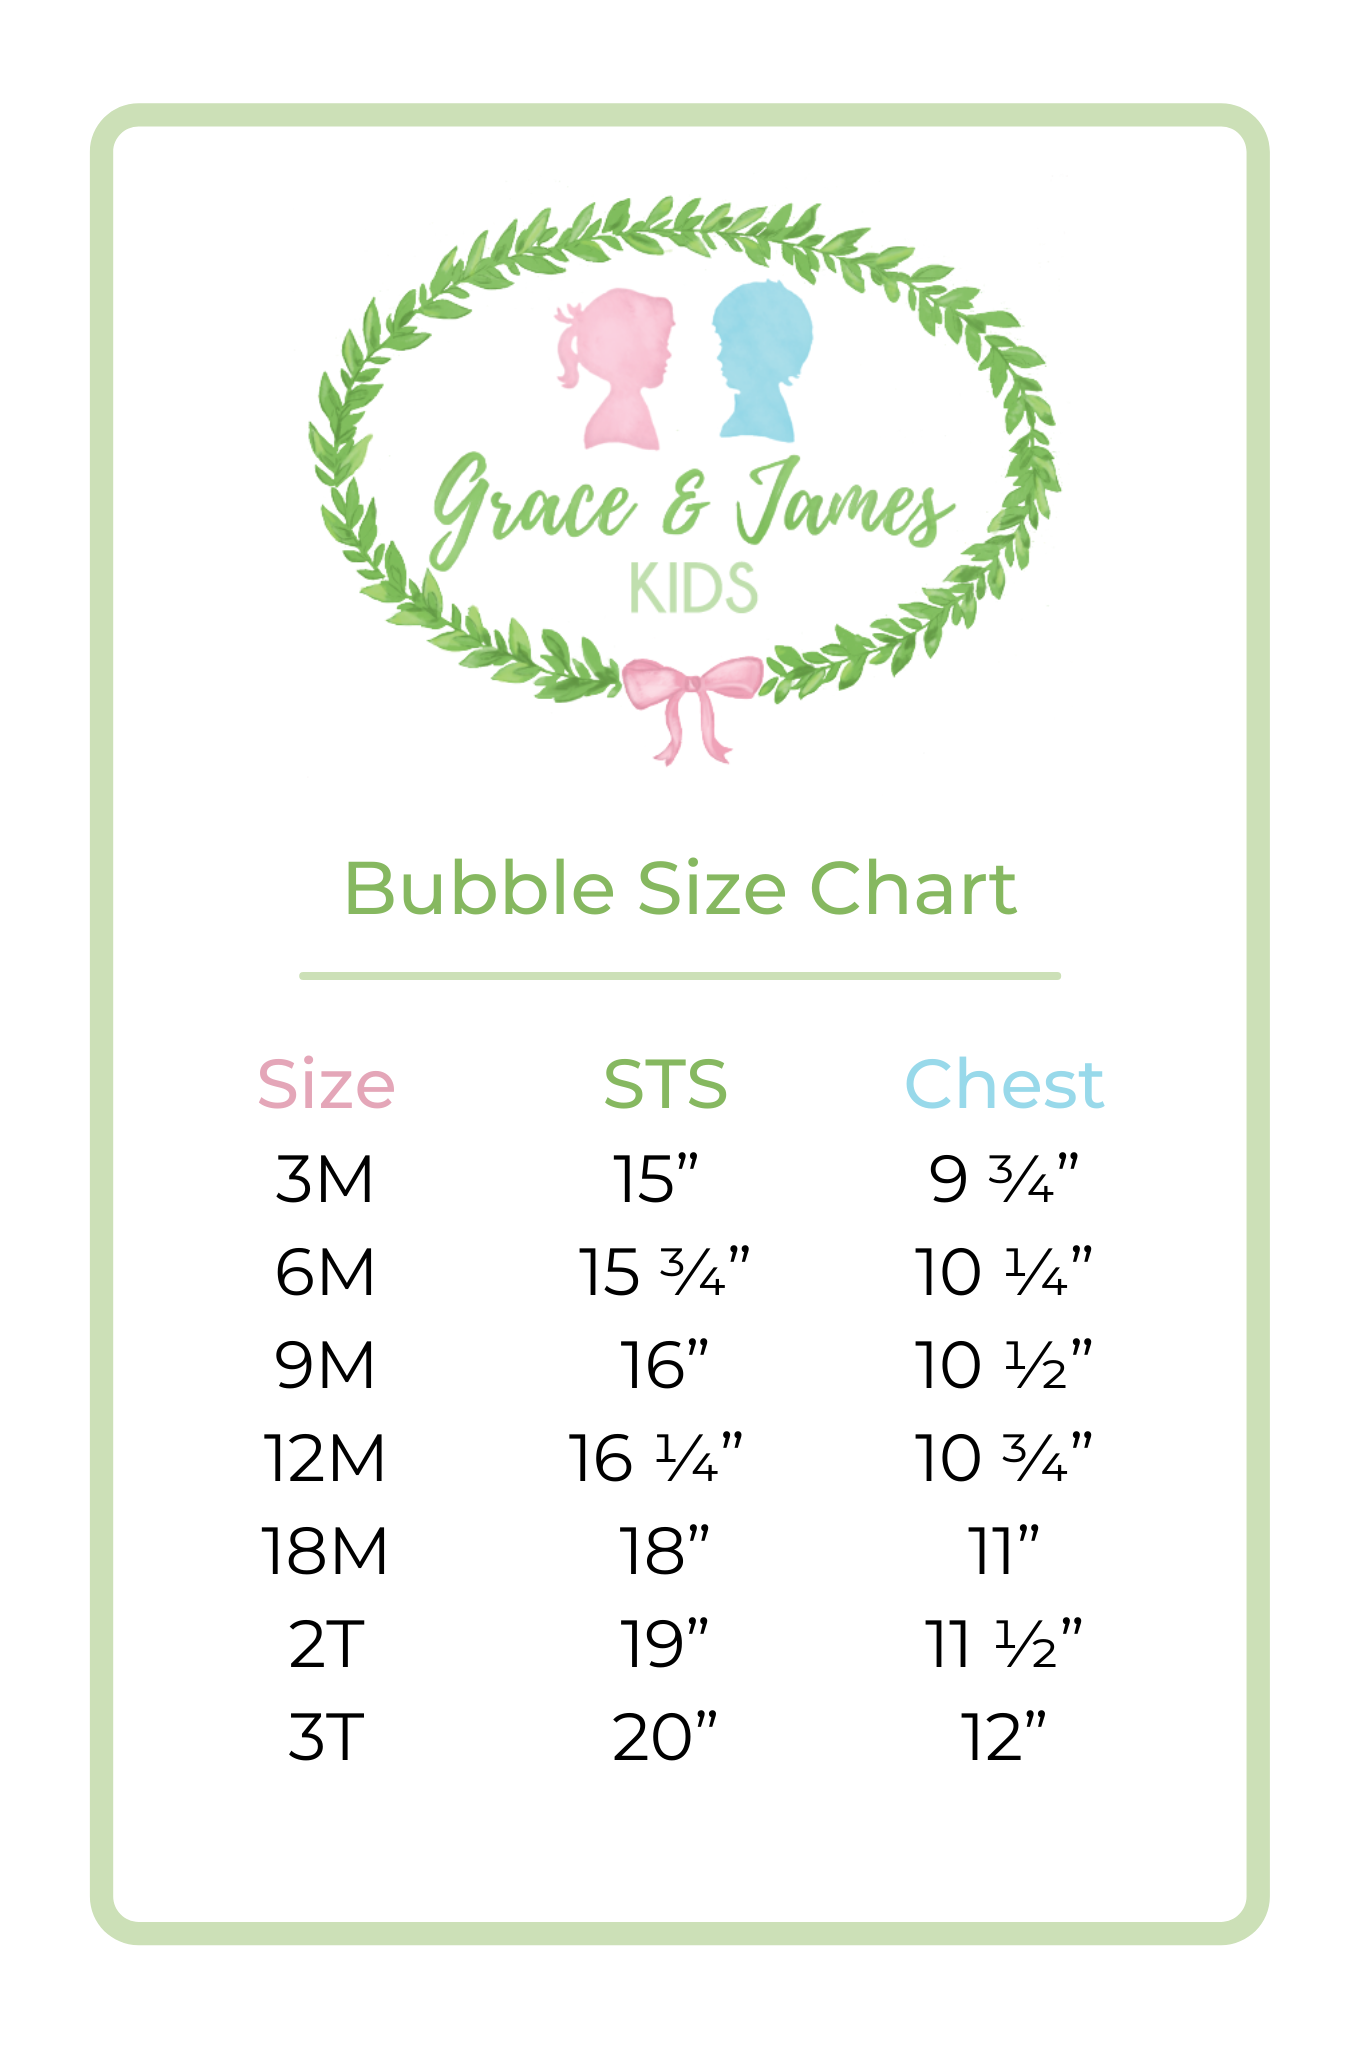 Grace and James Kids - Bunny Bubble